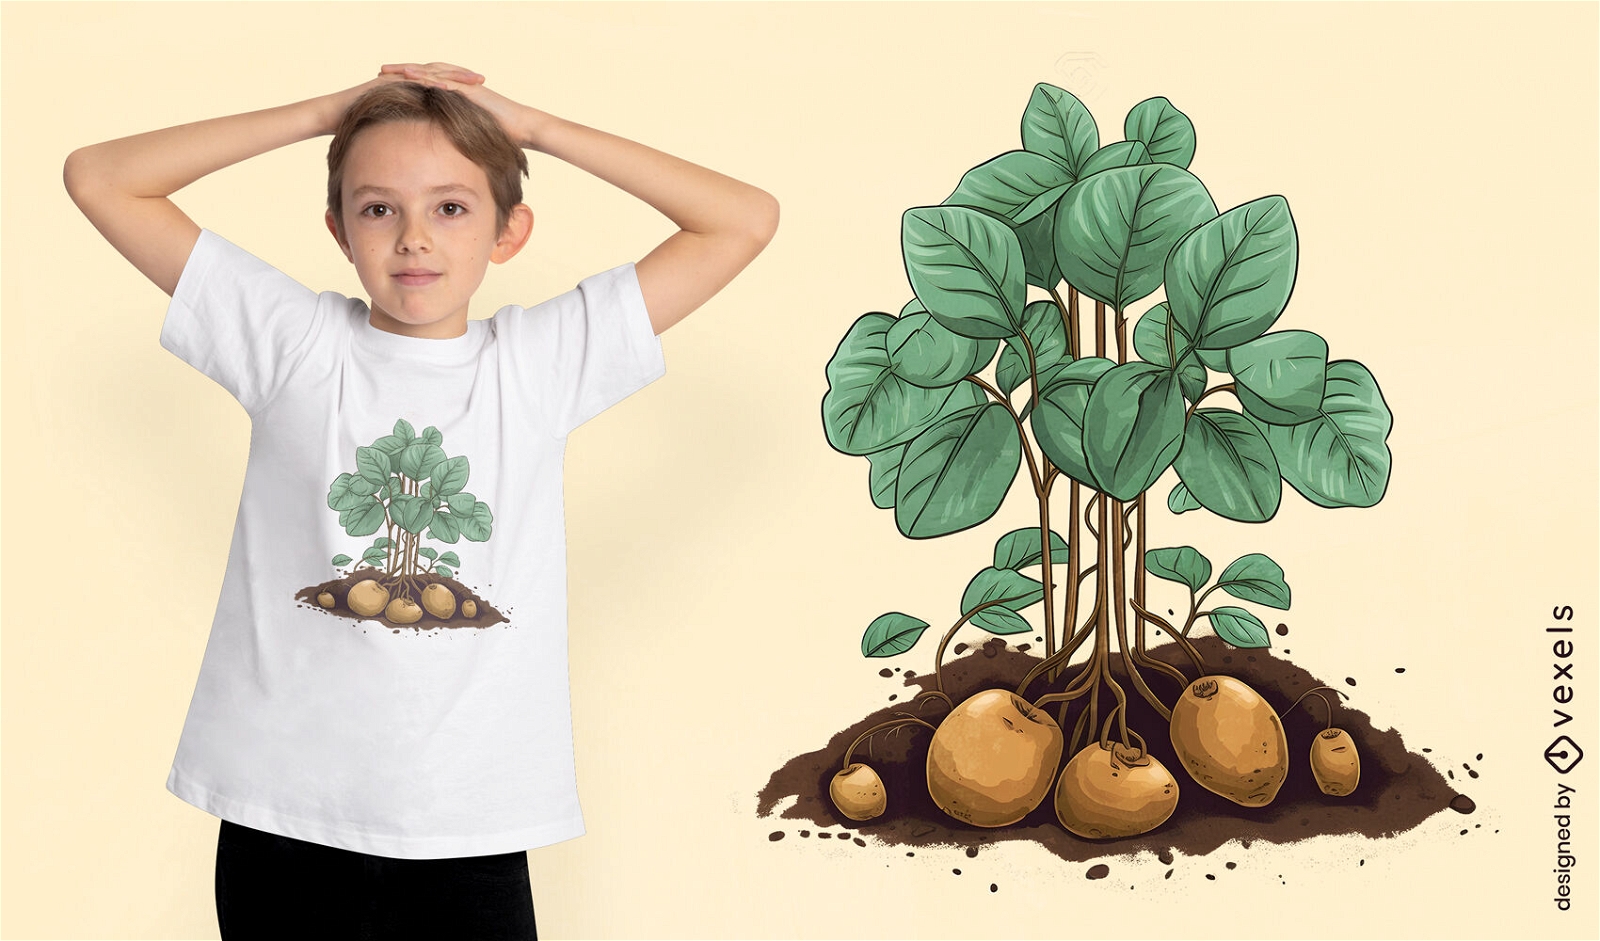 Potato plant t-shirt design